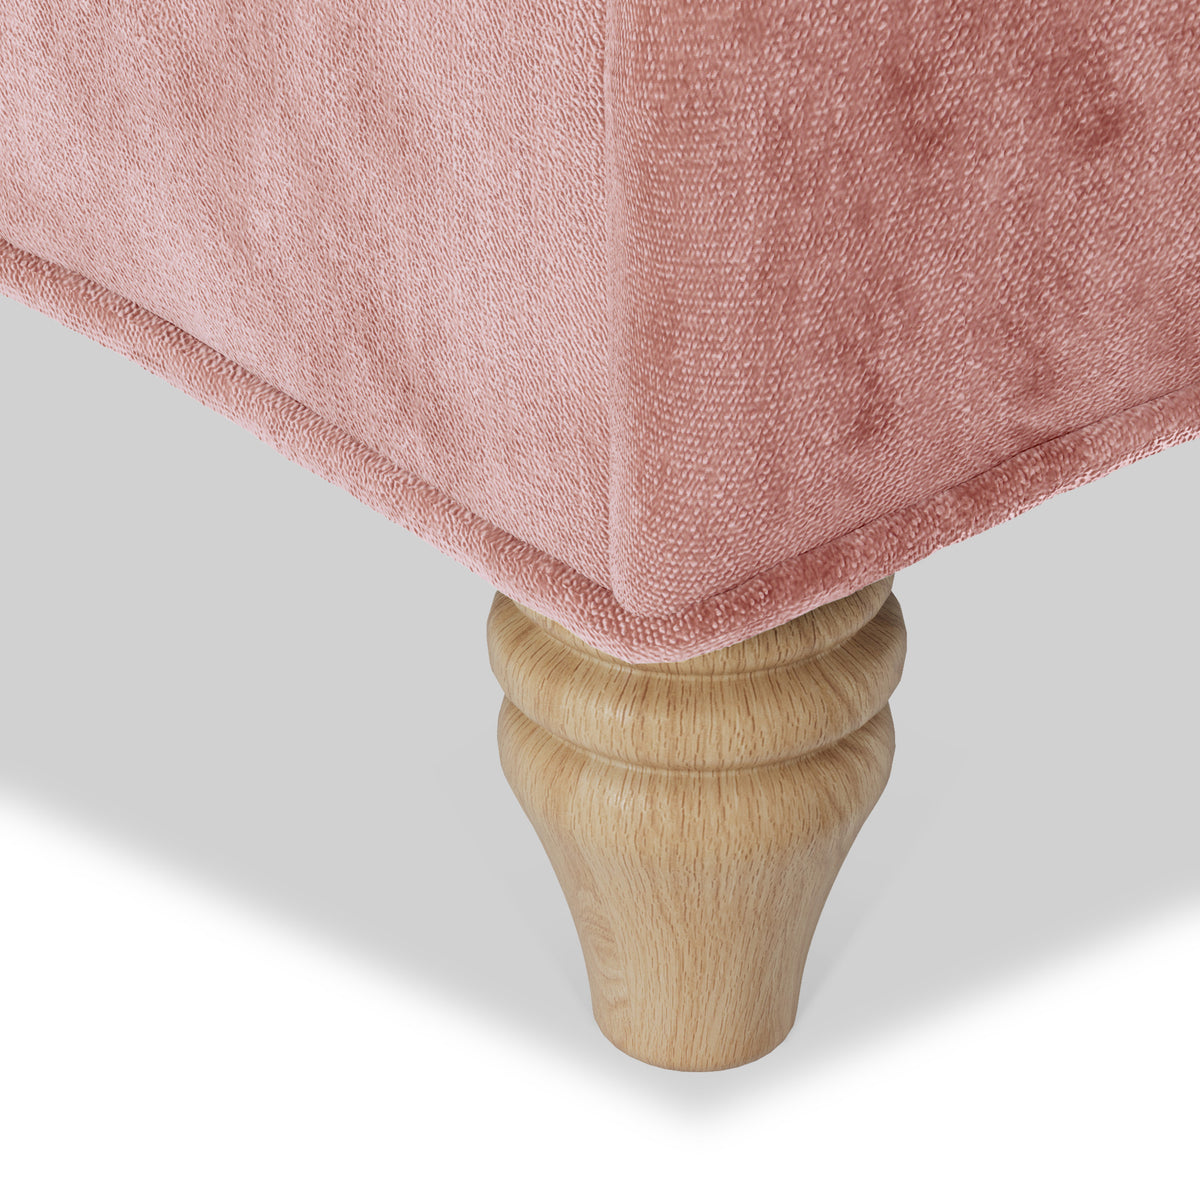 Alfie Plum Pink Large Corner Sofa from Roseland Furniture